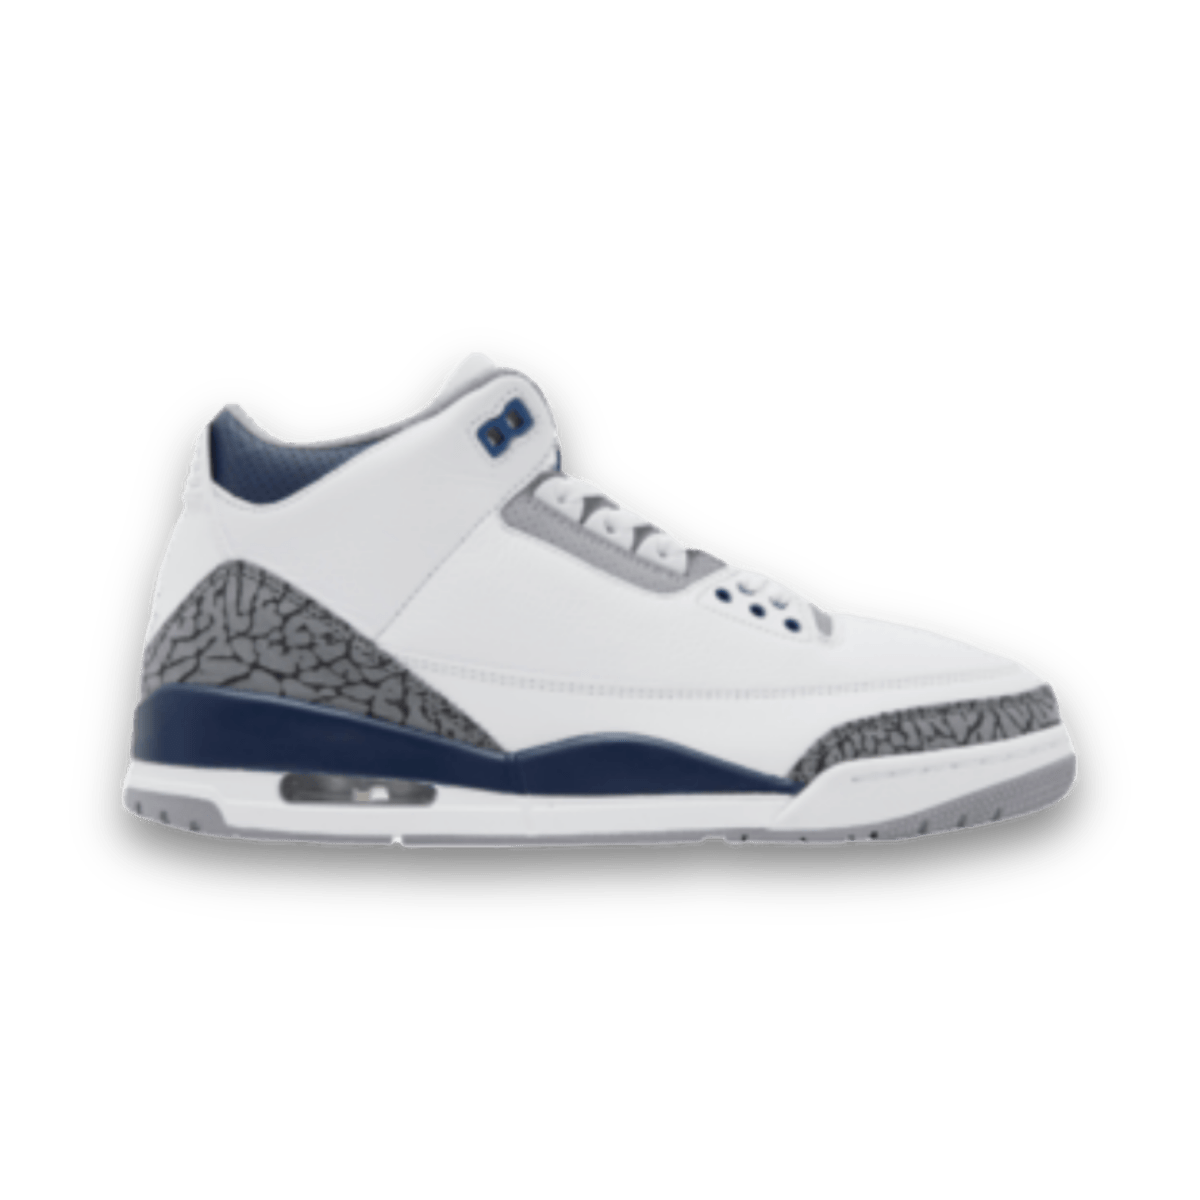 Air Jordan 3 Retro 'Midnight Navy' - Mid Sneaker - Jawns on Fire Sneakers & Streetwear